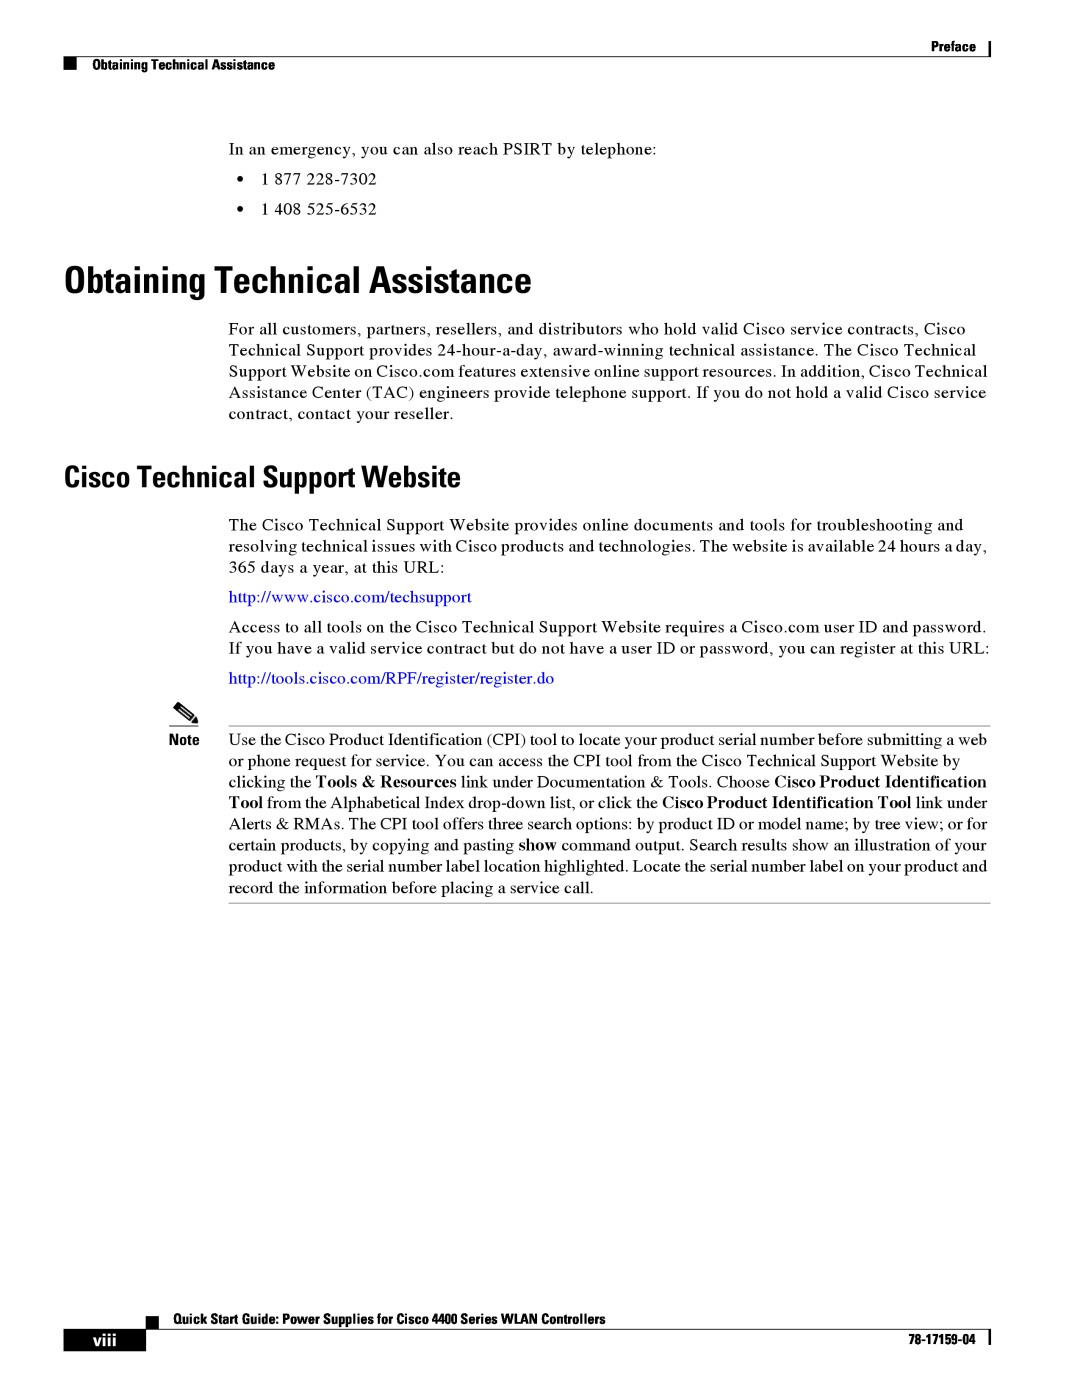 Cisco Systems 4400 quick start Obtaining Technical Assistance, Cisco Technical Support Website, viii 